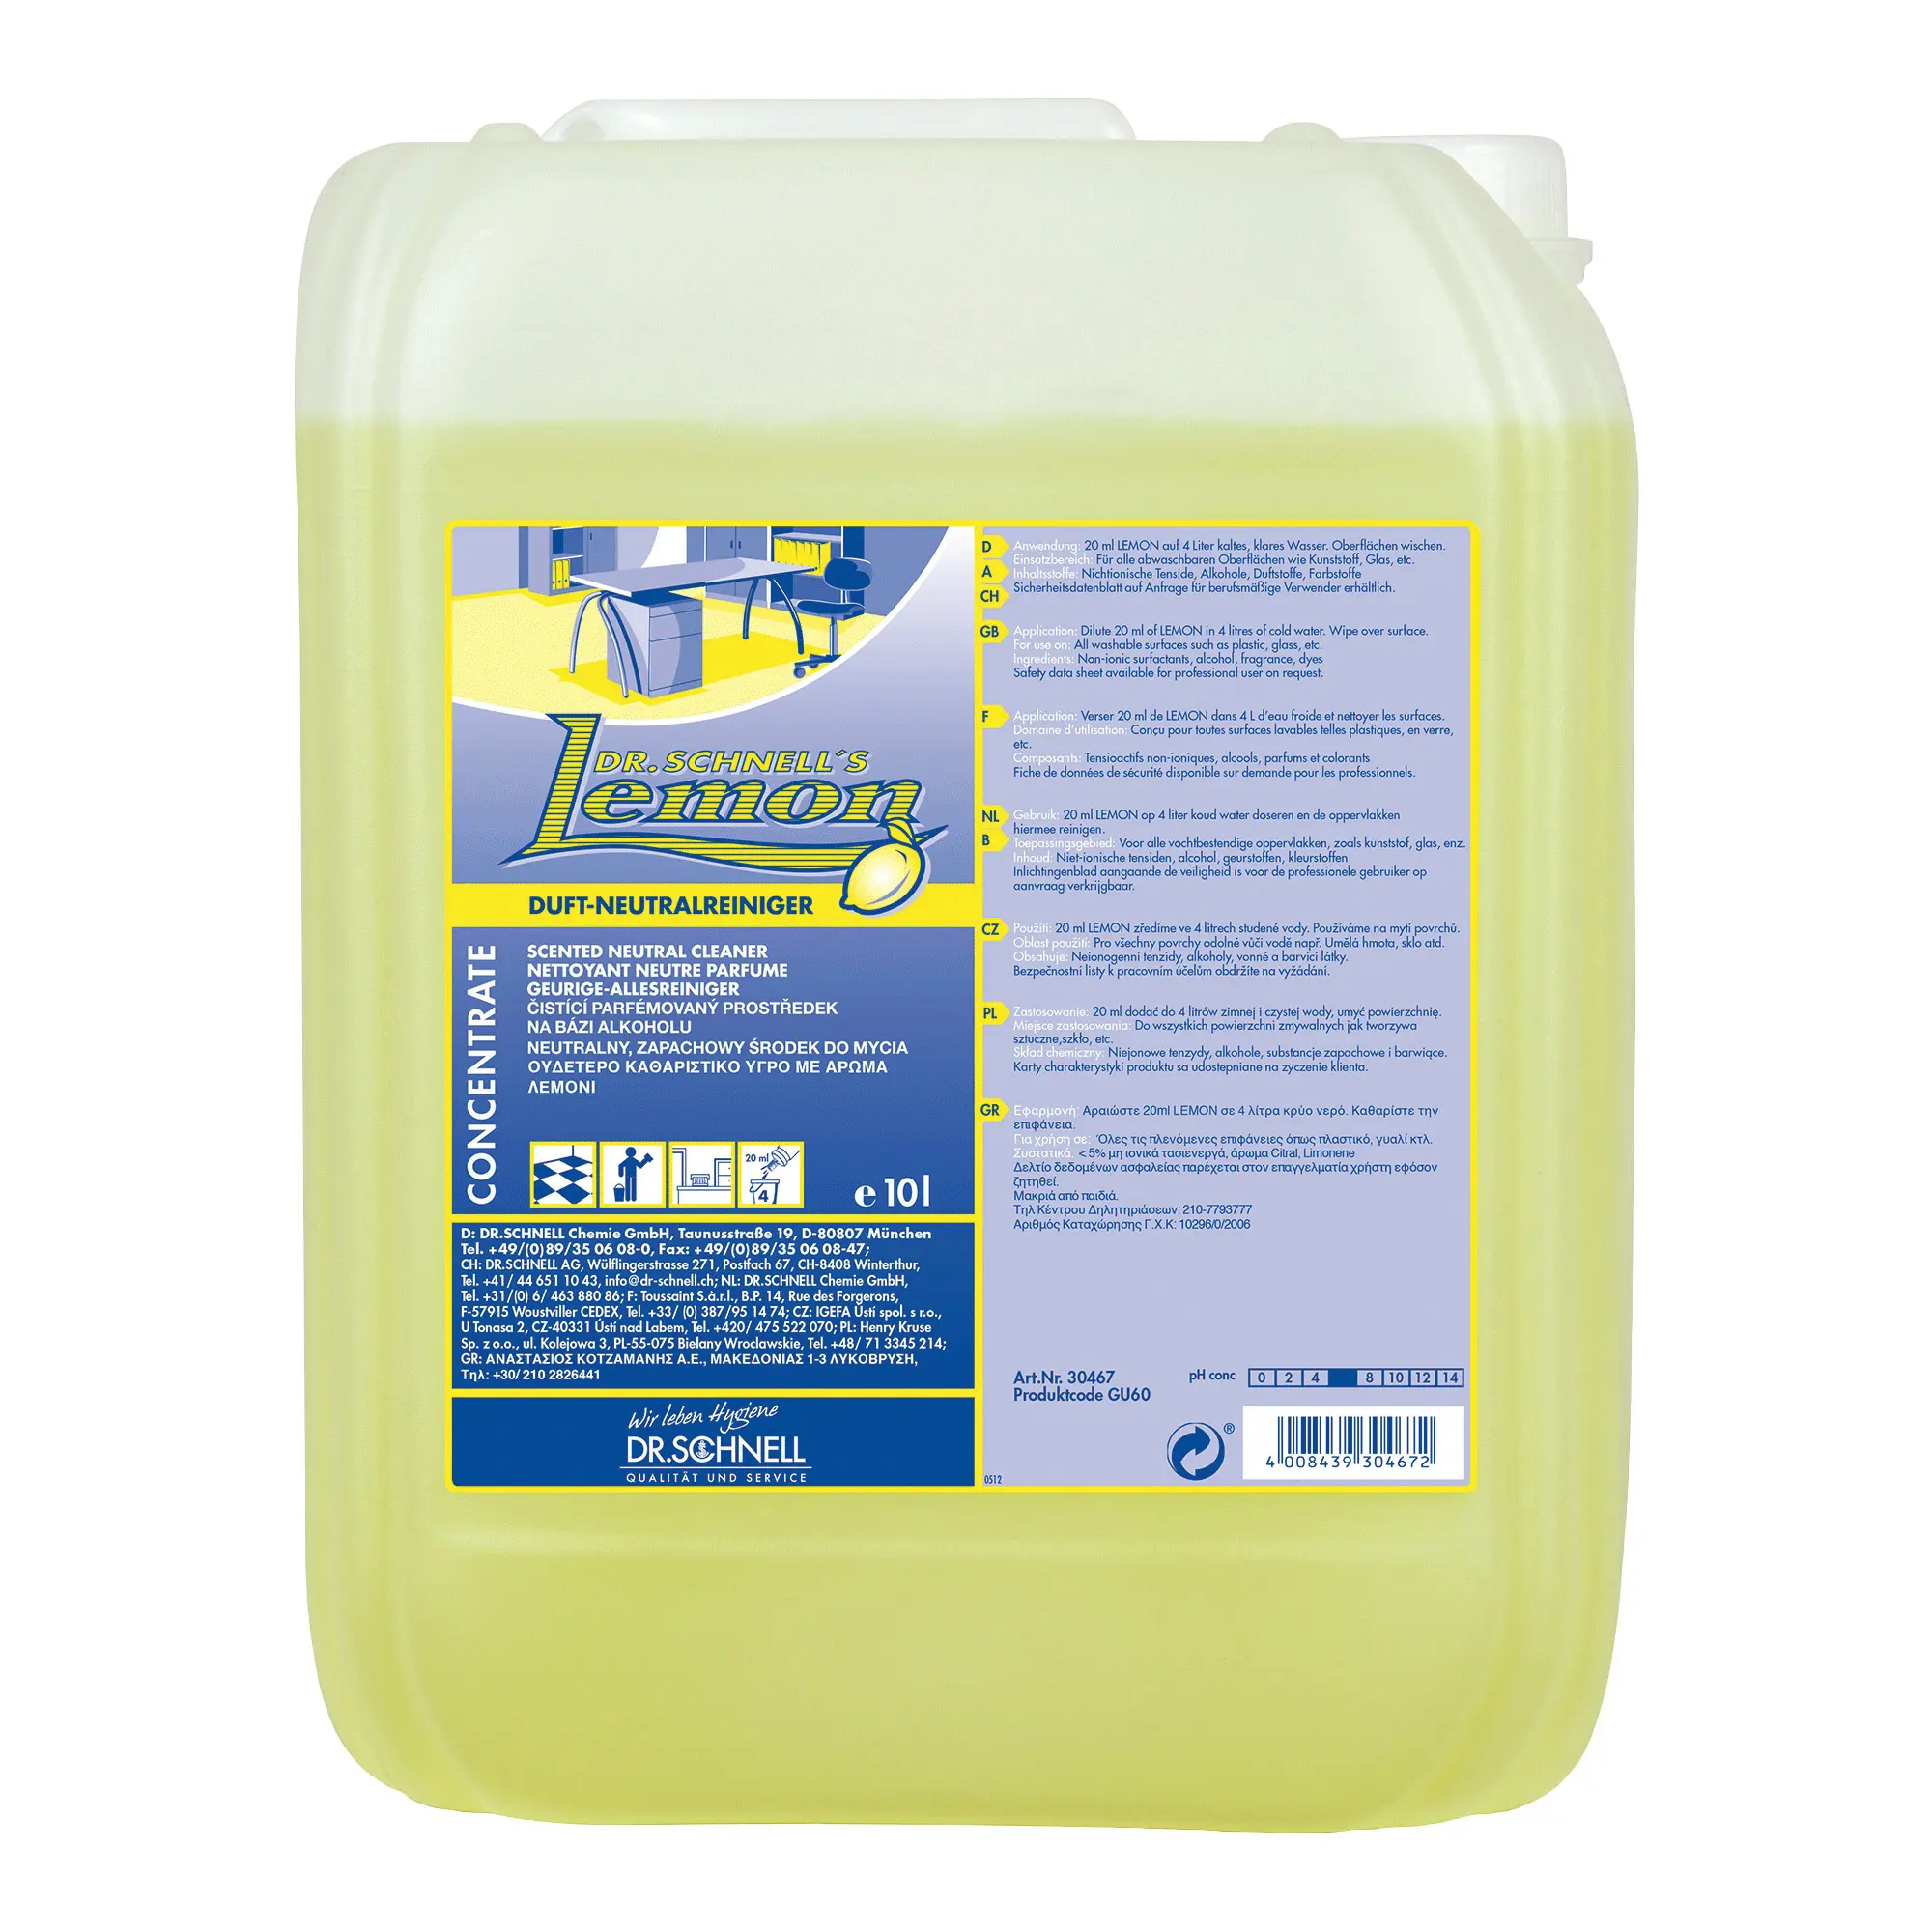 Dr. Schnell Lemon Duft-Neutralreiniger 10 Liter Kanister 30467_1